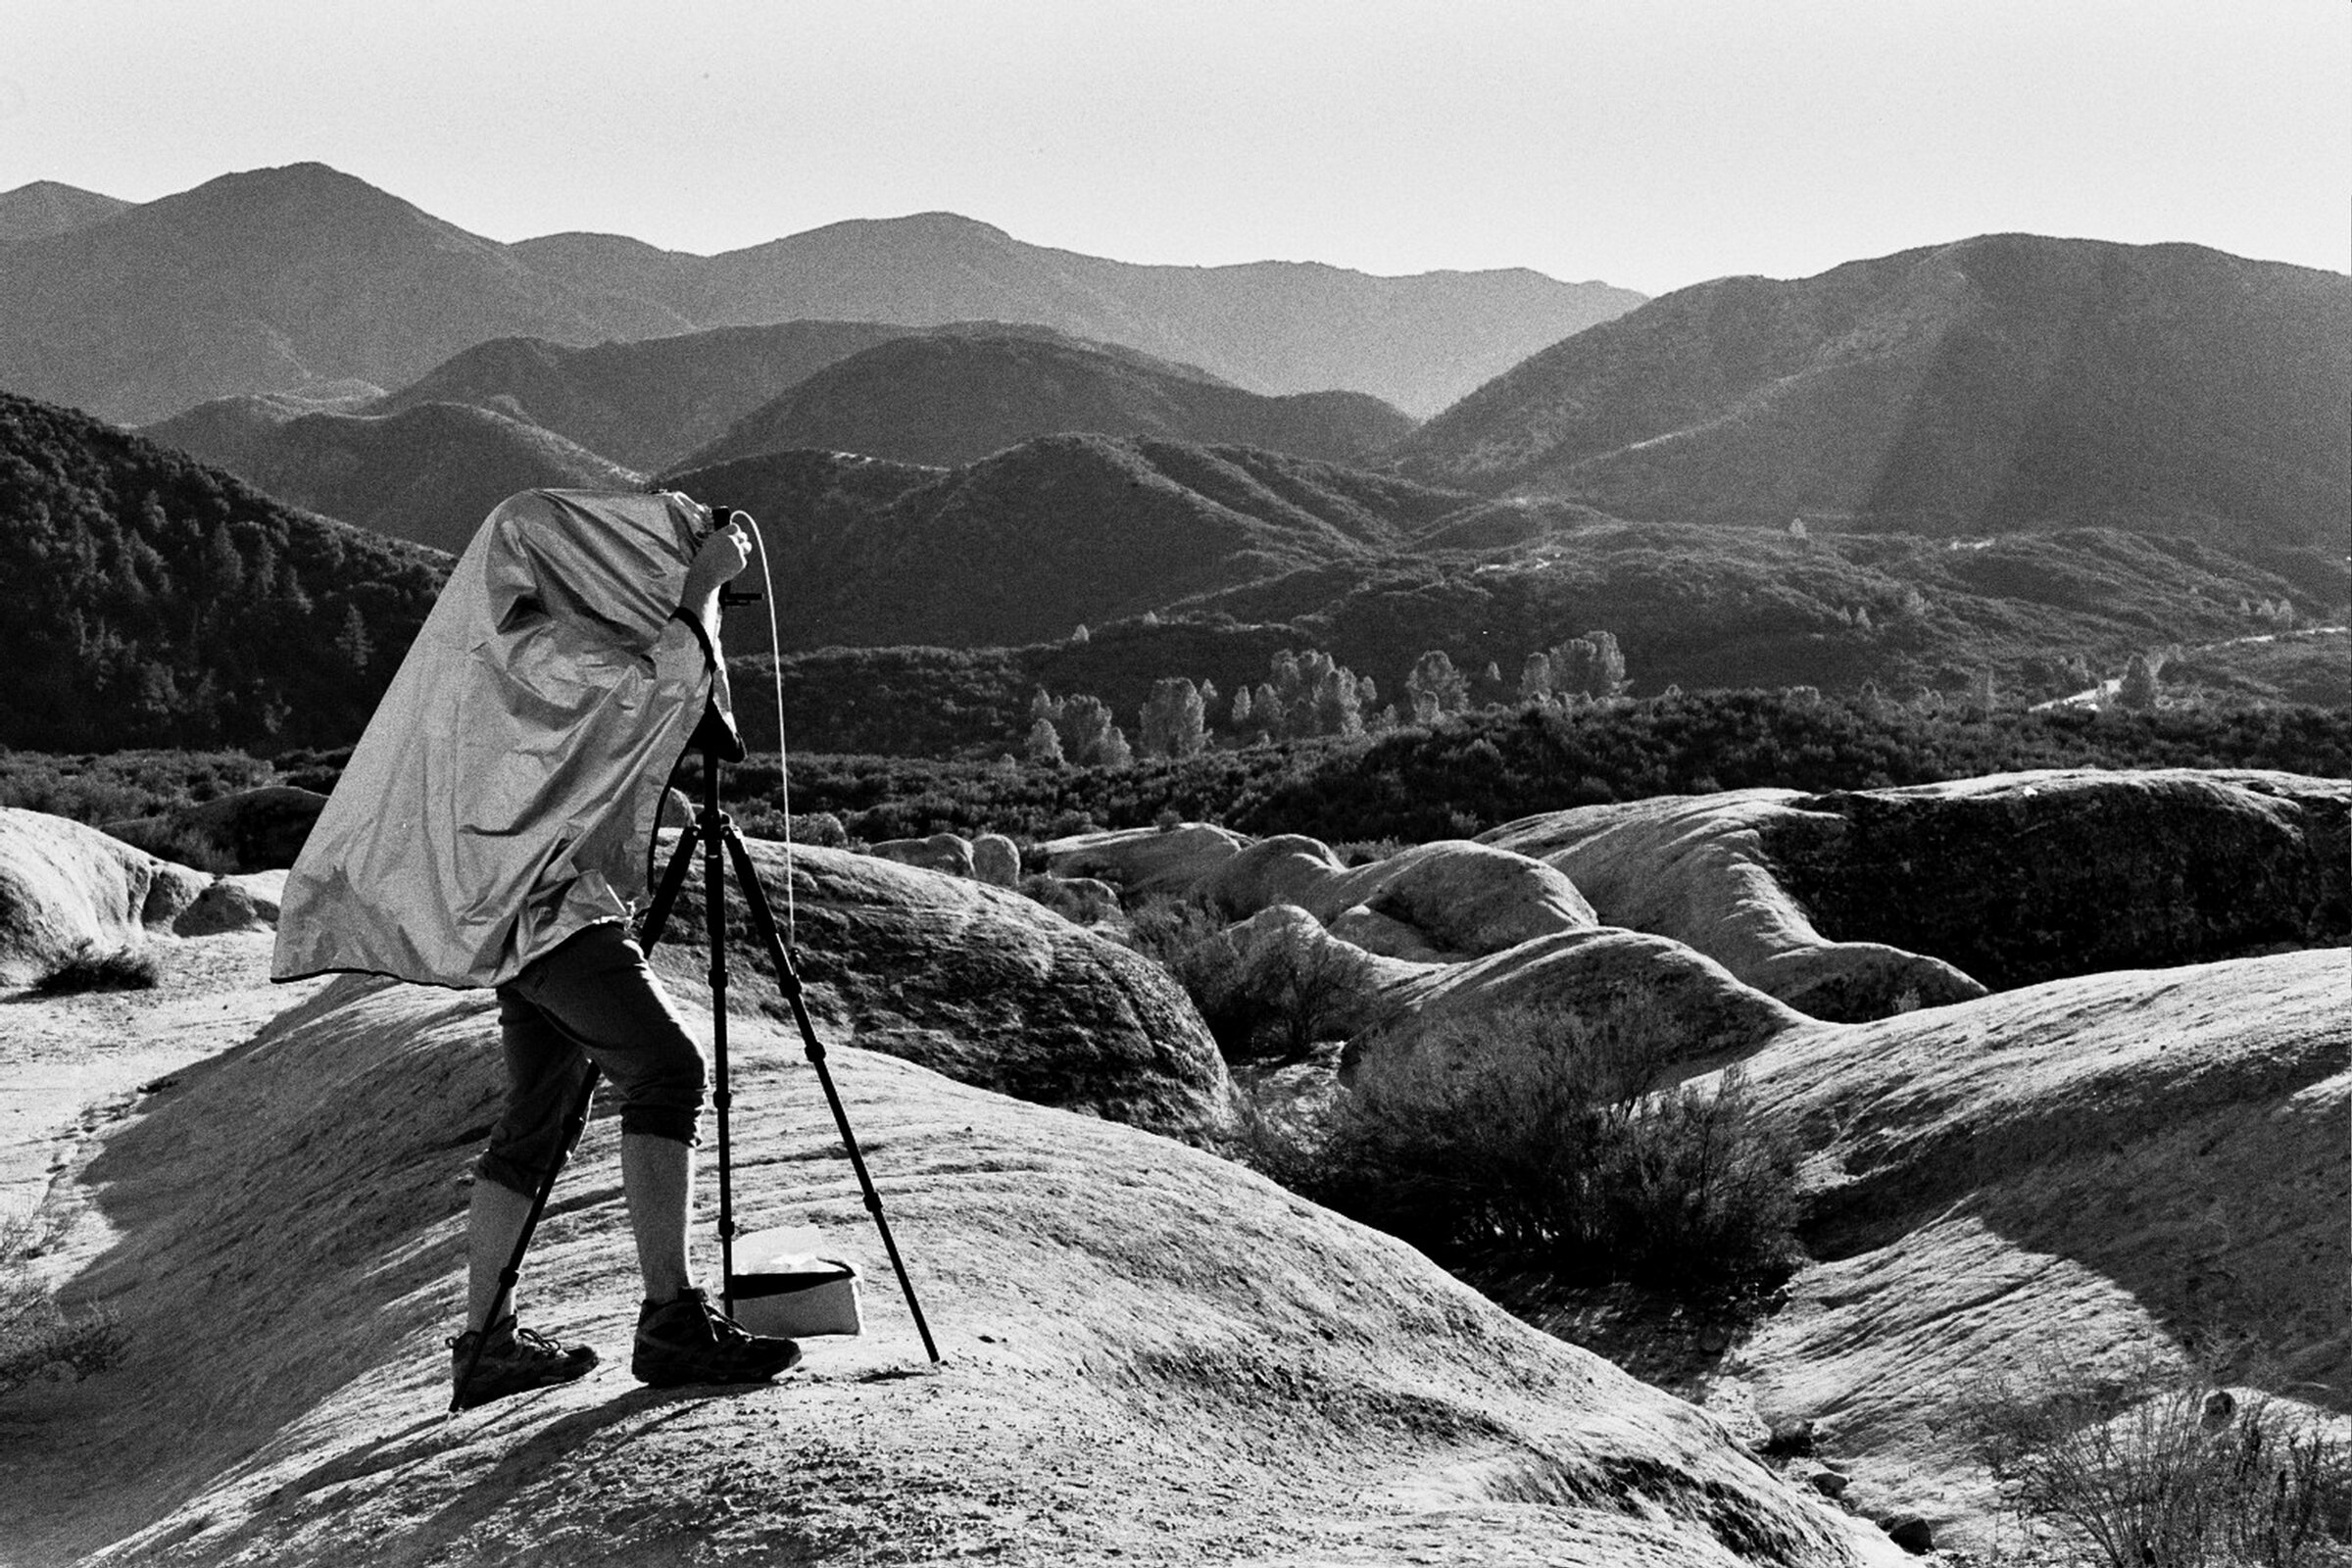  Peter Farr shooting large format | Piedras Blancas Trail, CA 